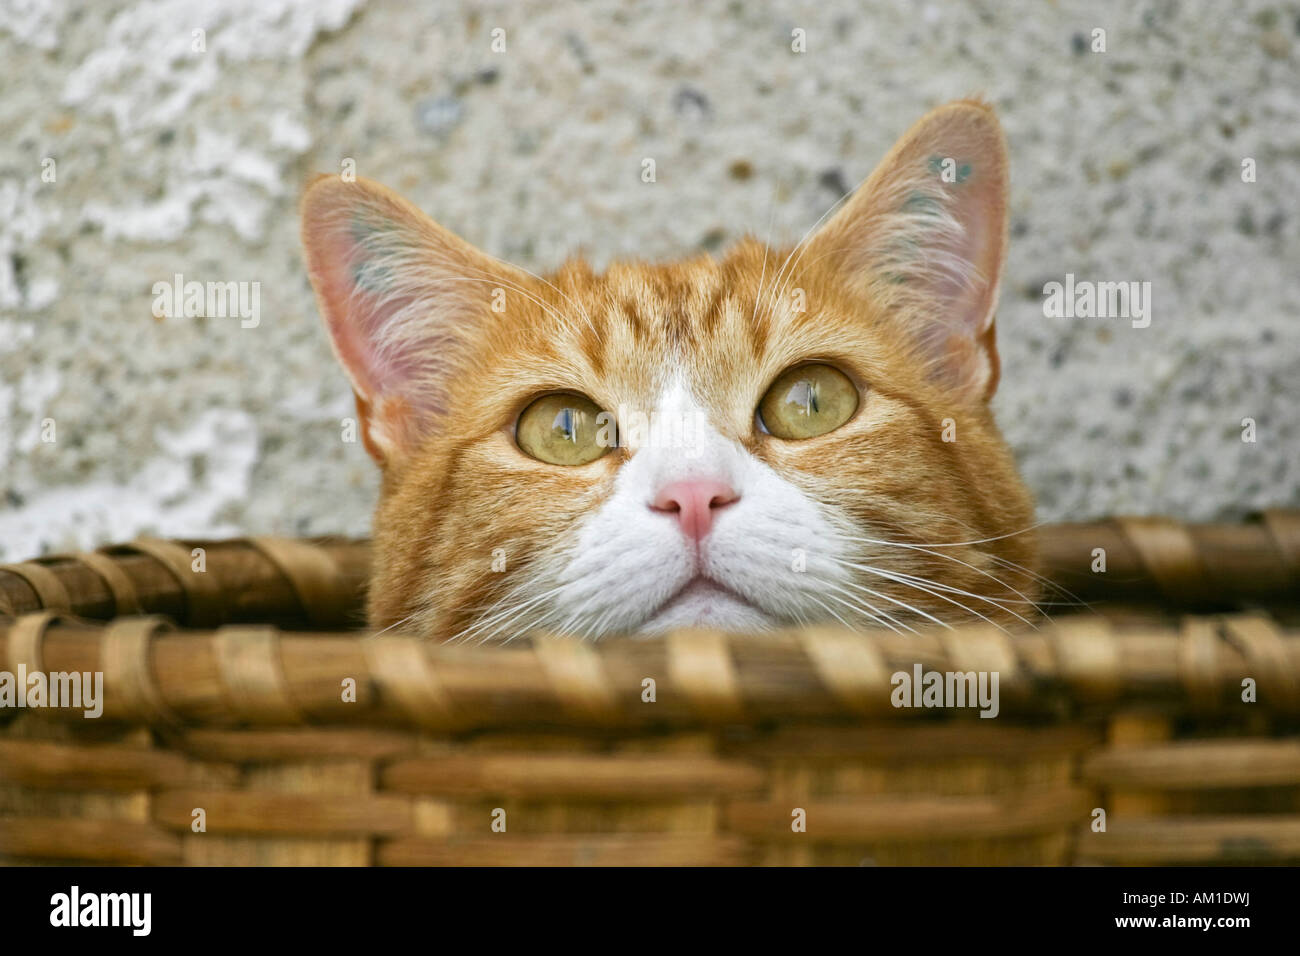 European shorthair cat hidden in a basket Stock Photo